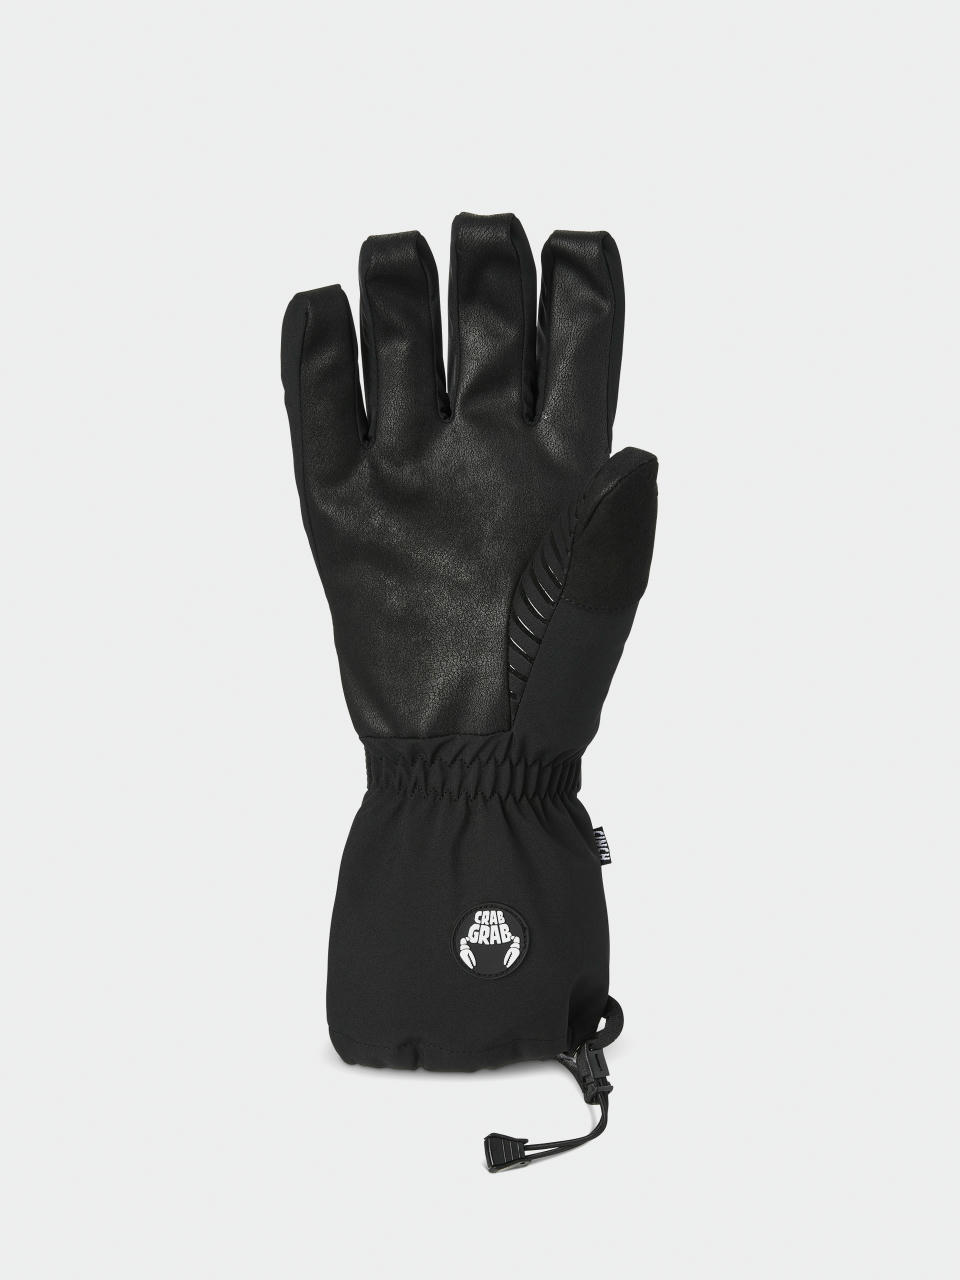 Crab Grab Cinch Glove Gloves (black)